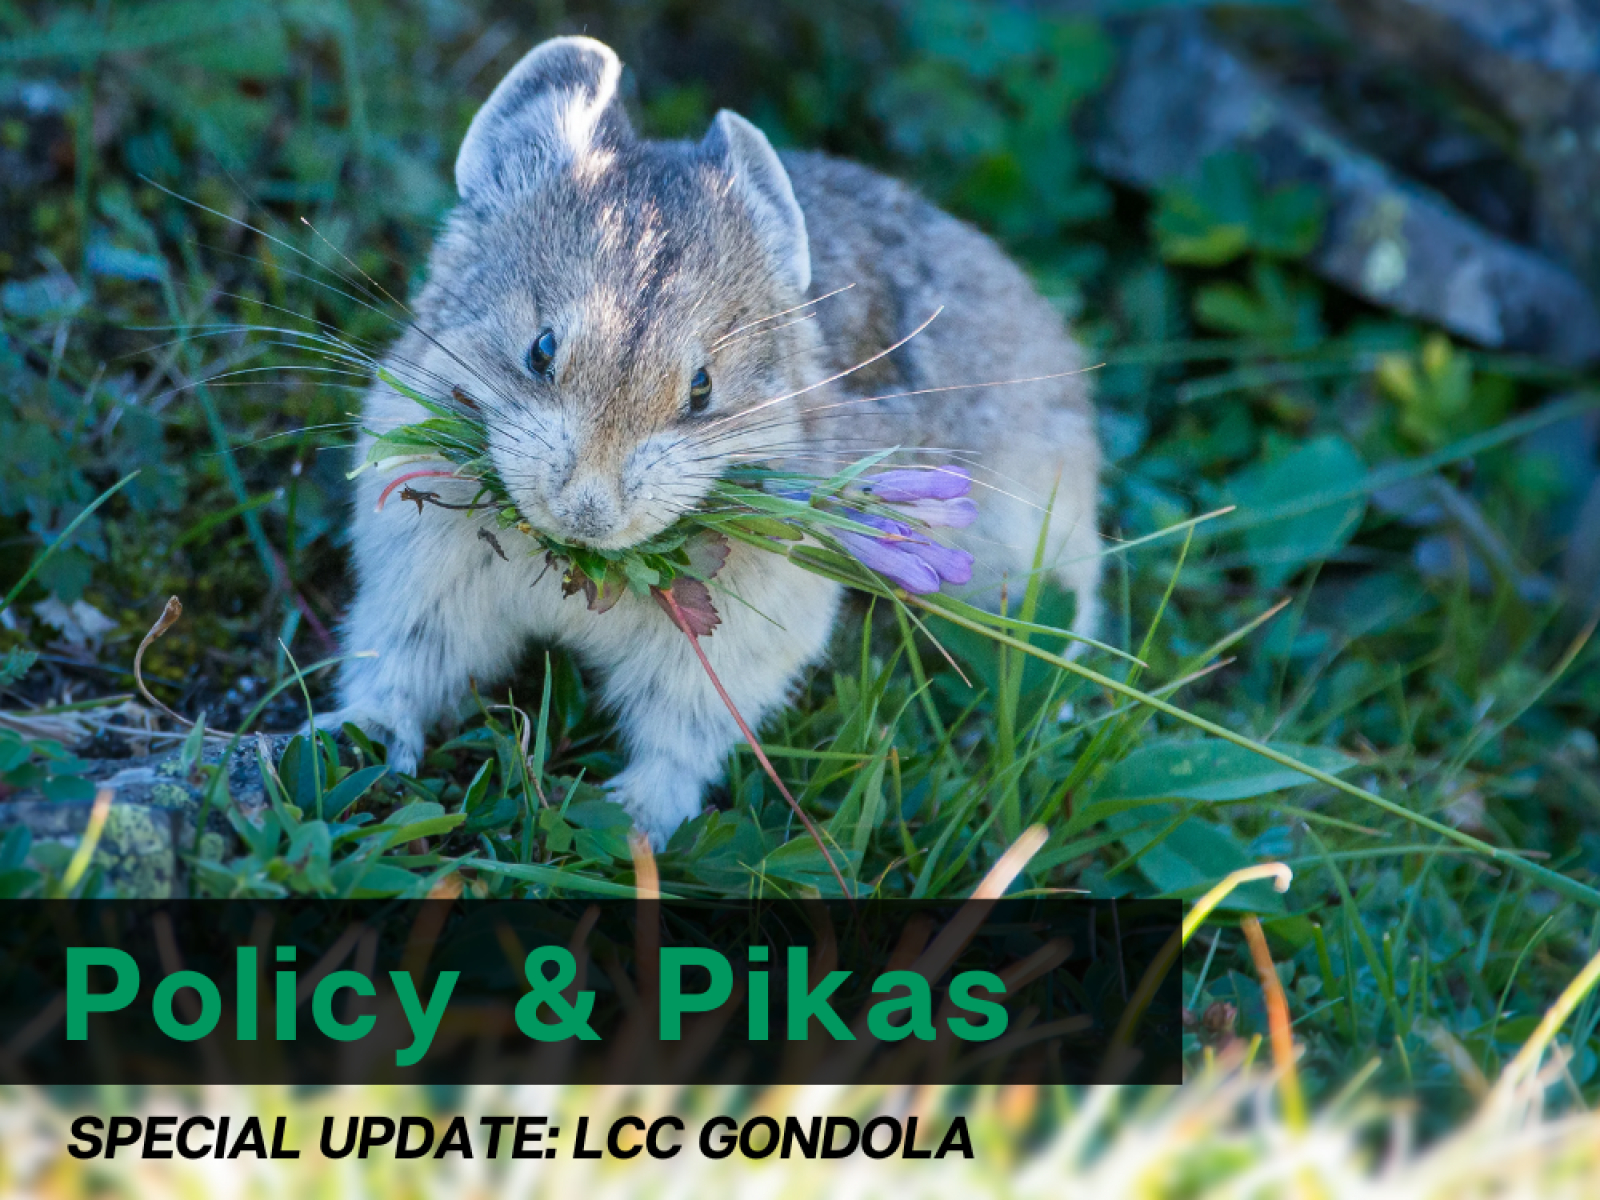 Policy and Pikas: LCC Gondola